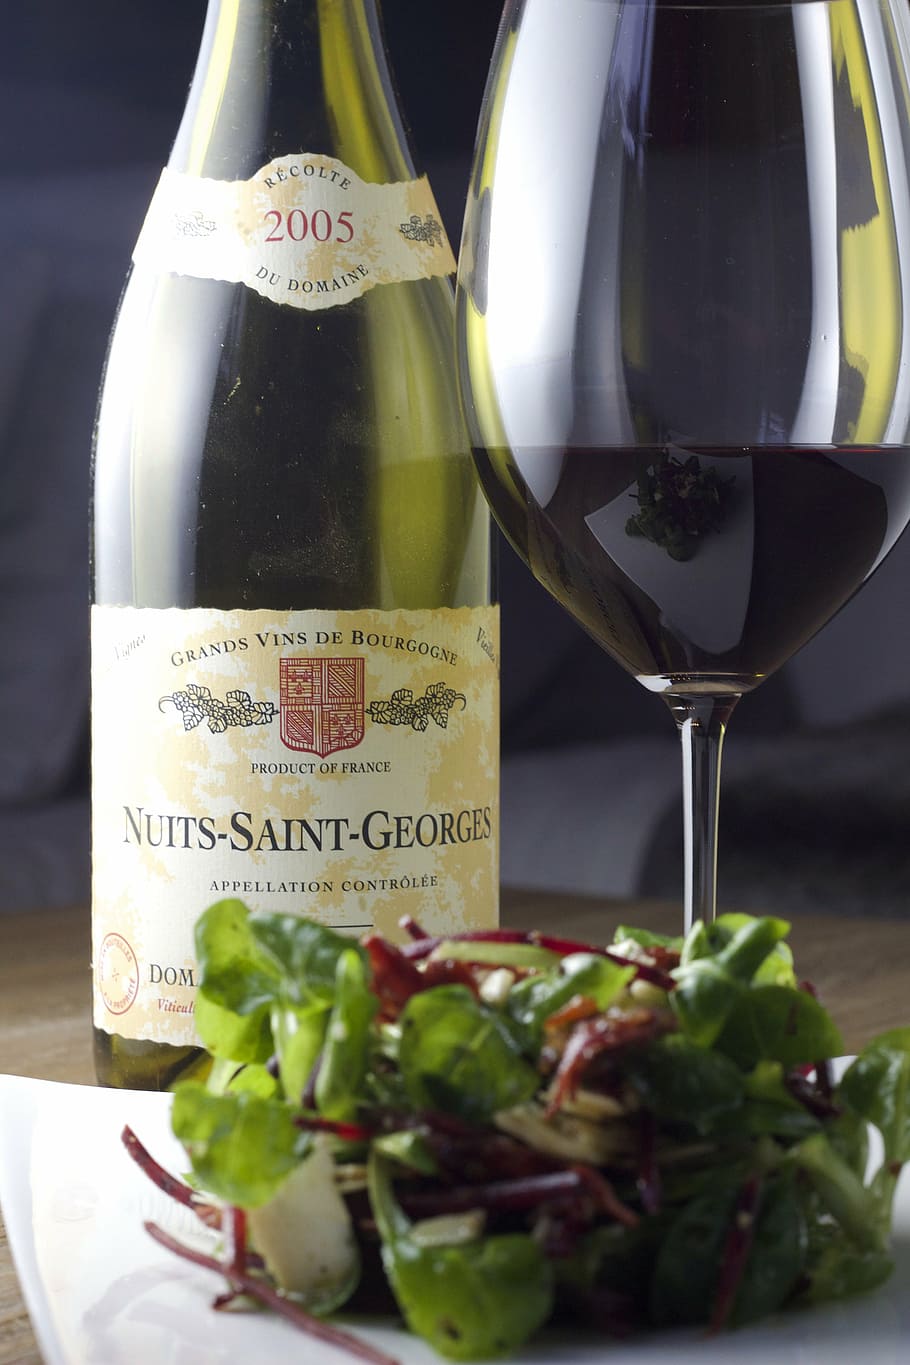 botol nuits-saint-georges, di samping, piring, gelas anggur, berdaun, sayuran, makan malam, salad, anggur, gelas